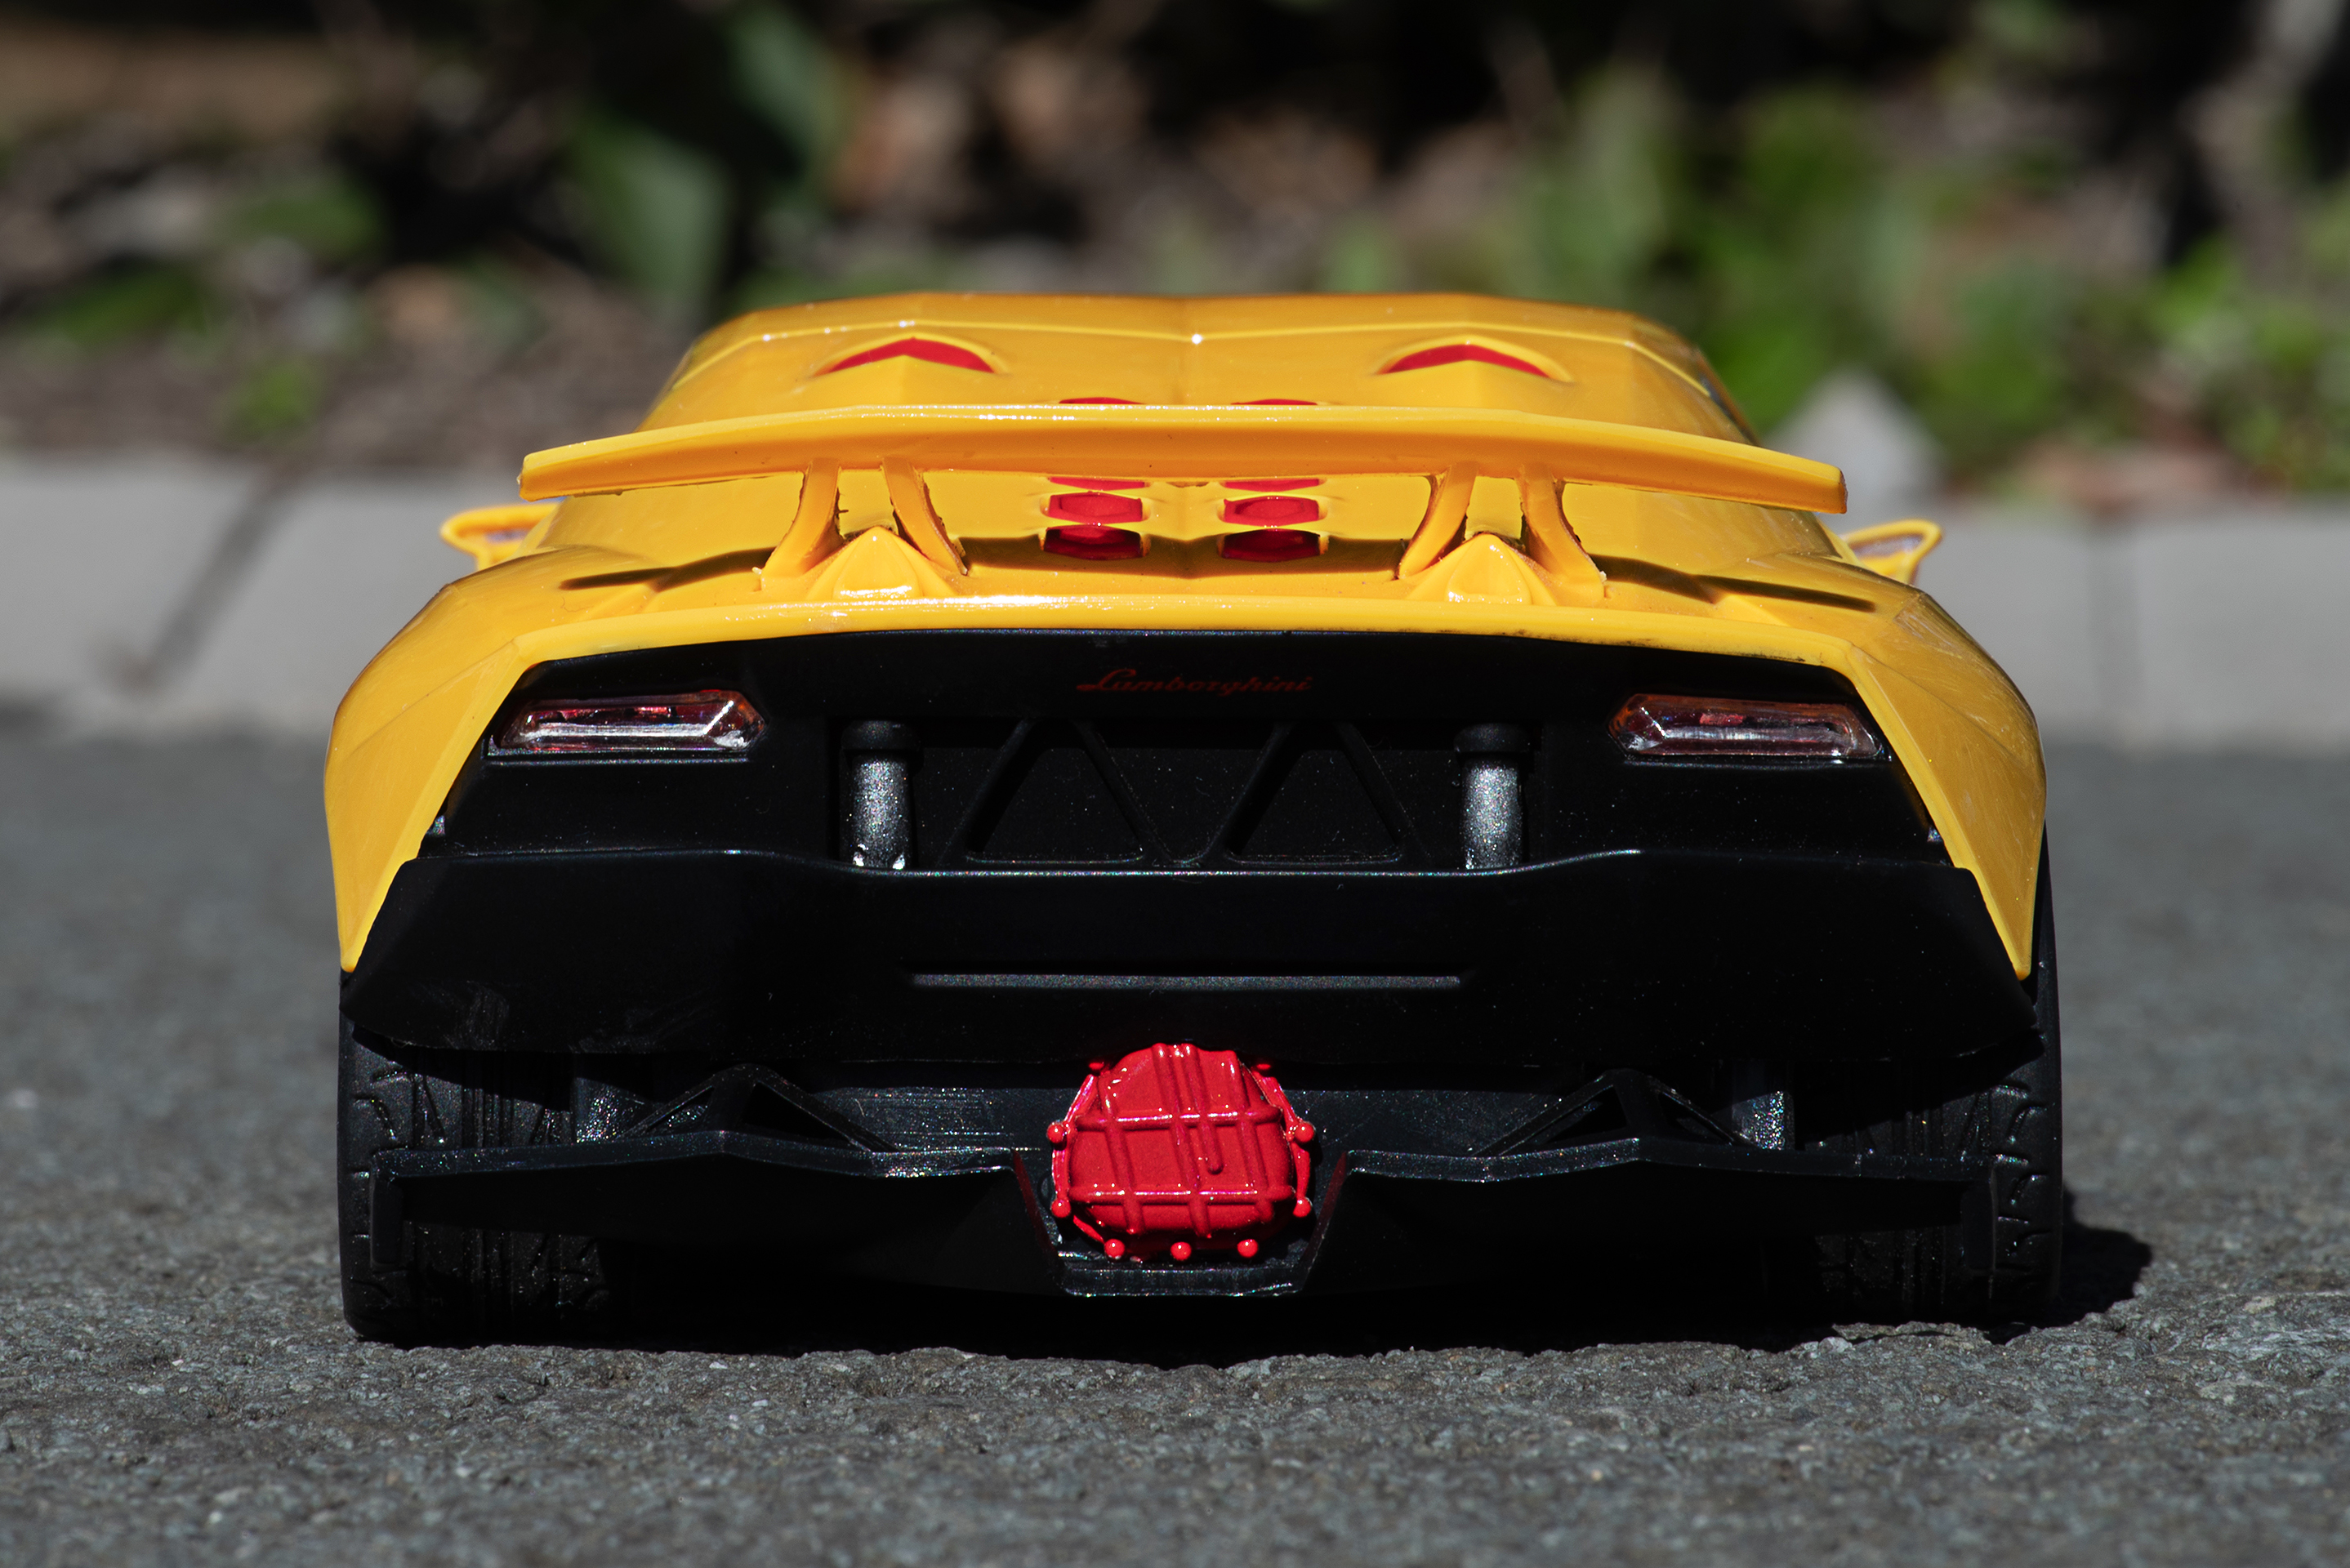 Ferngesteuerte Auto Lamborghini Sesto Elemento 1:24 Kinder Geschenk Lizenz Gelb